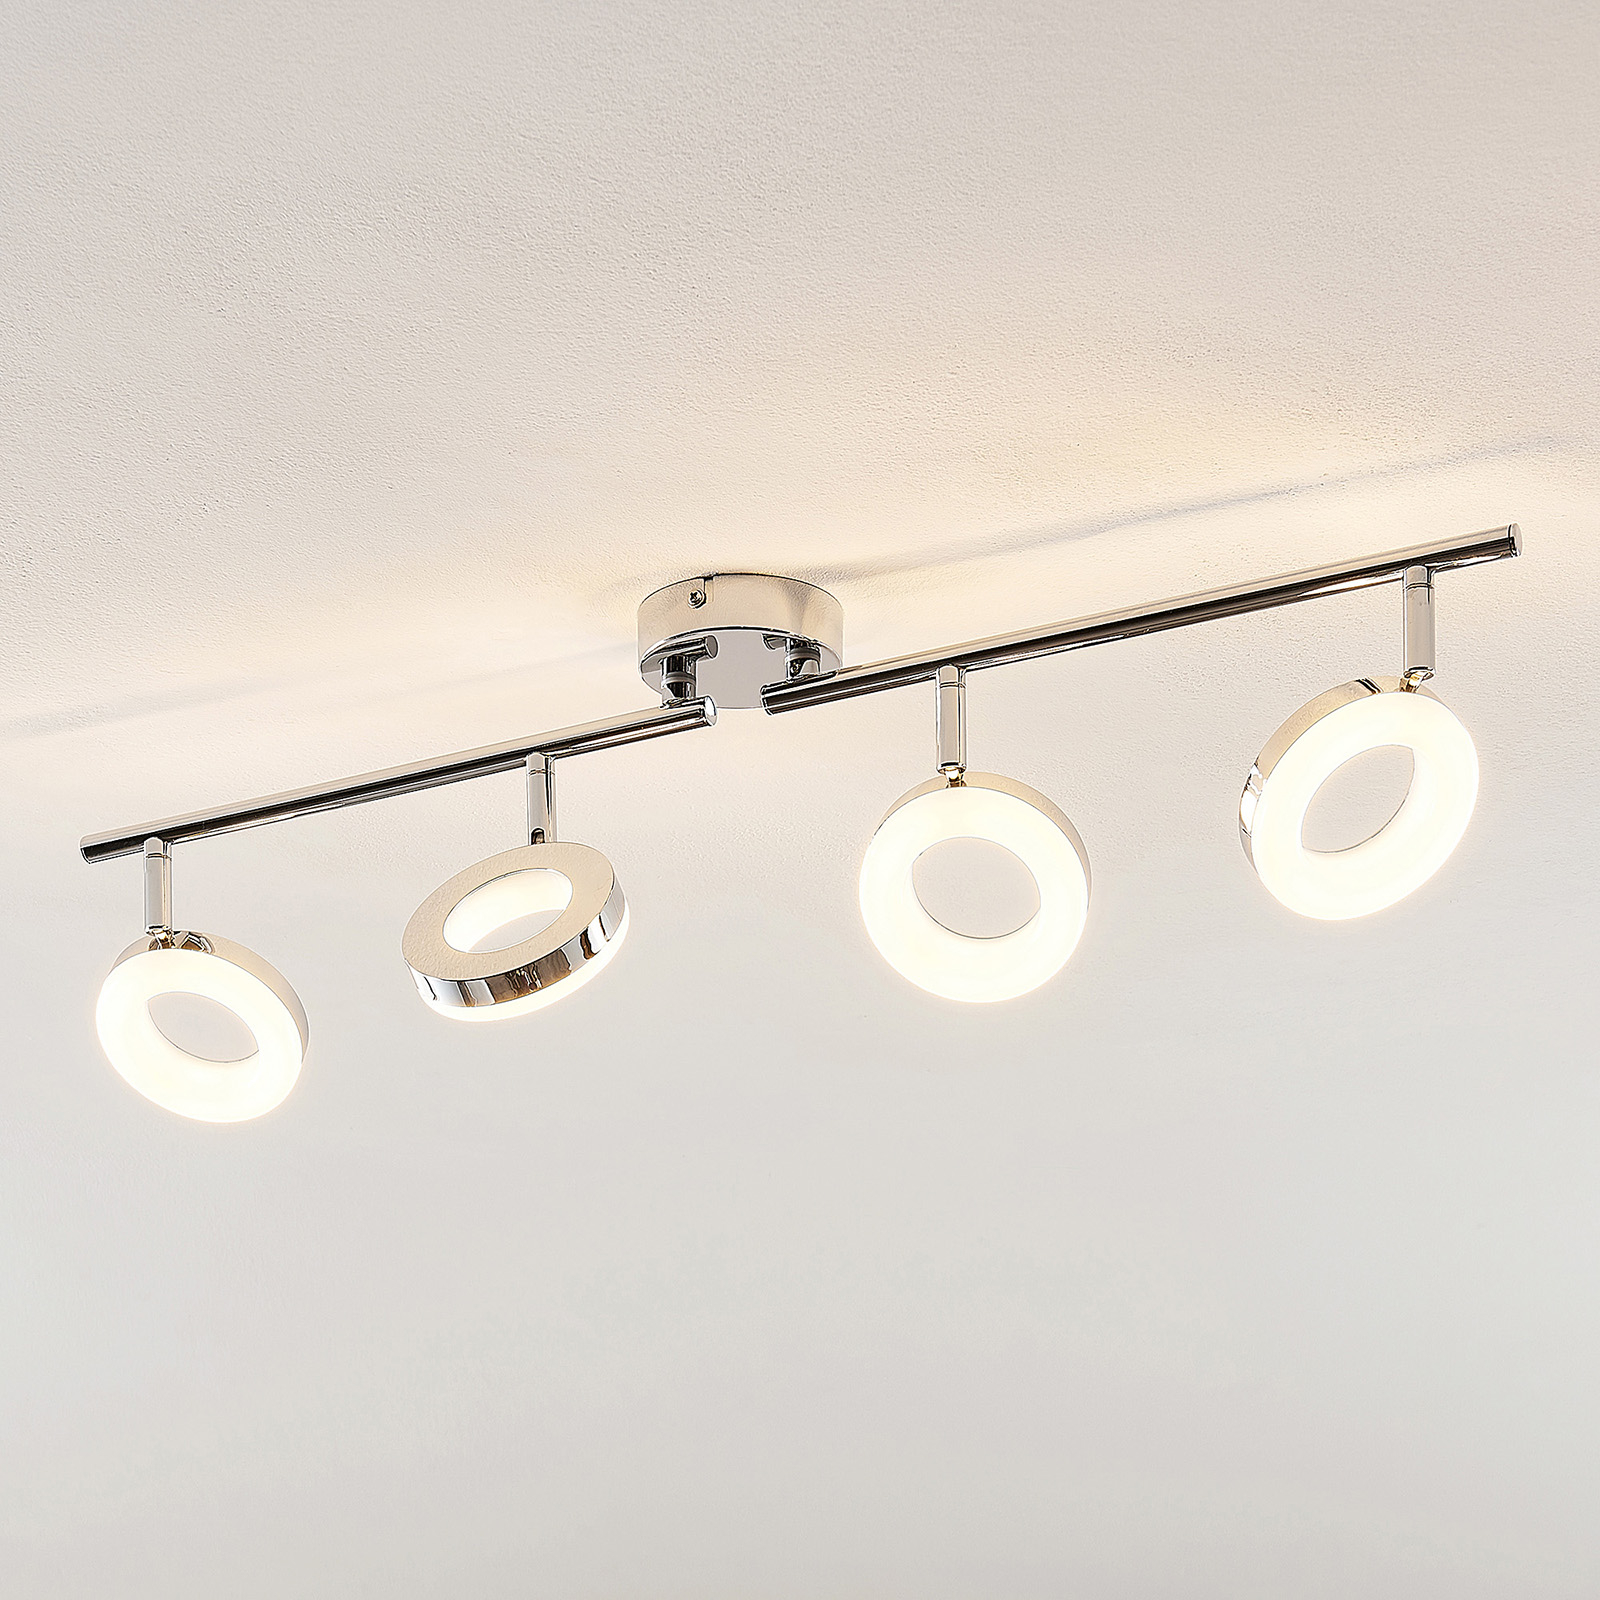 ELC Tioklia lampa sufitowa LED, chrom, 4-punktowa